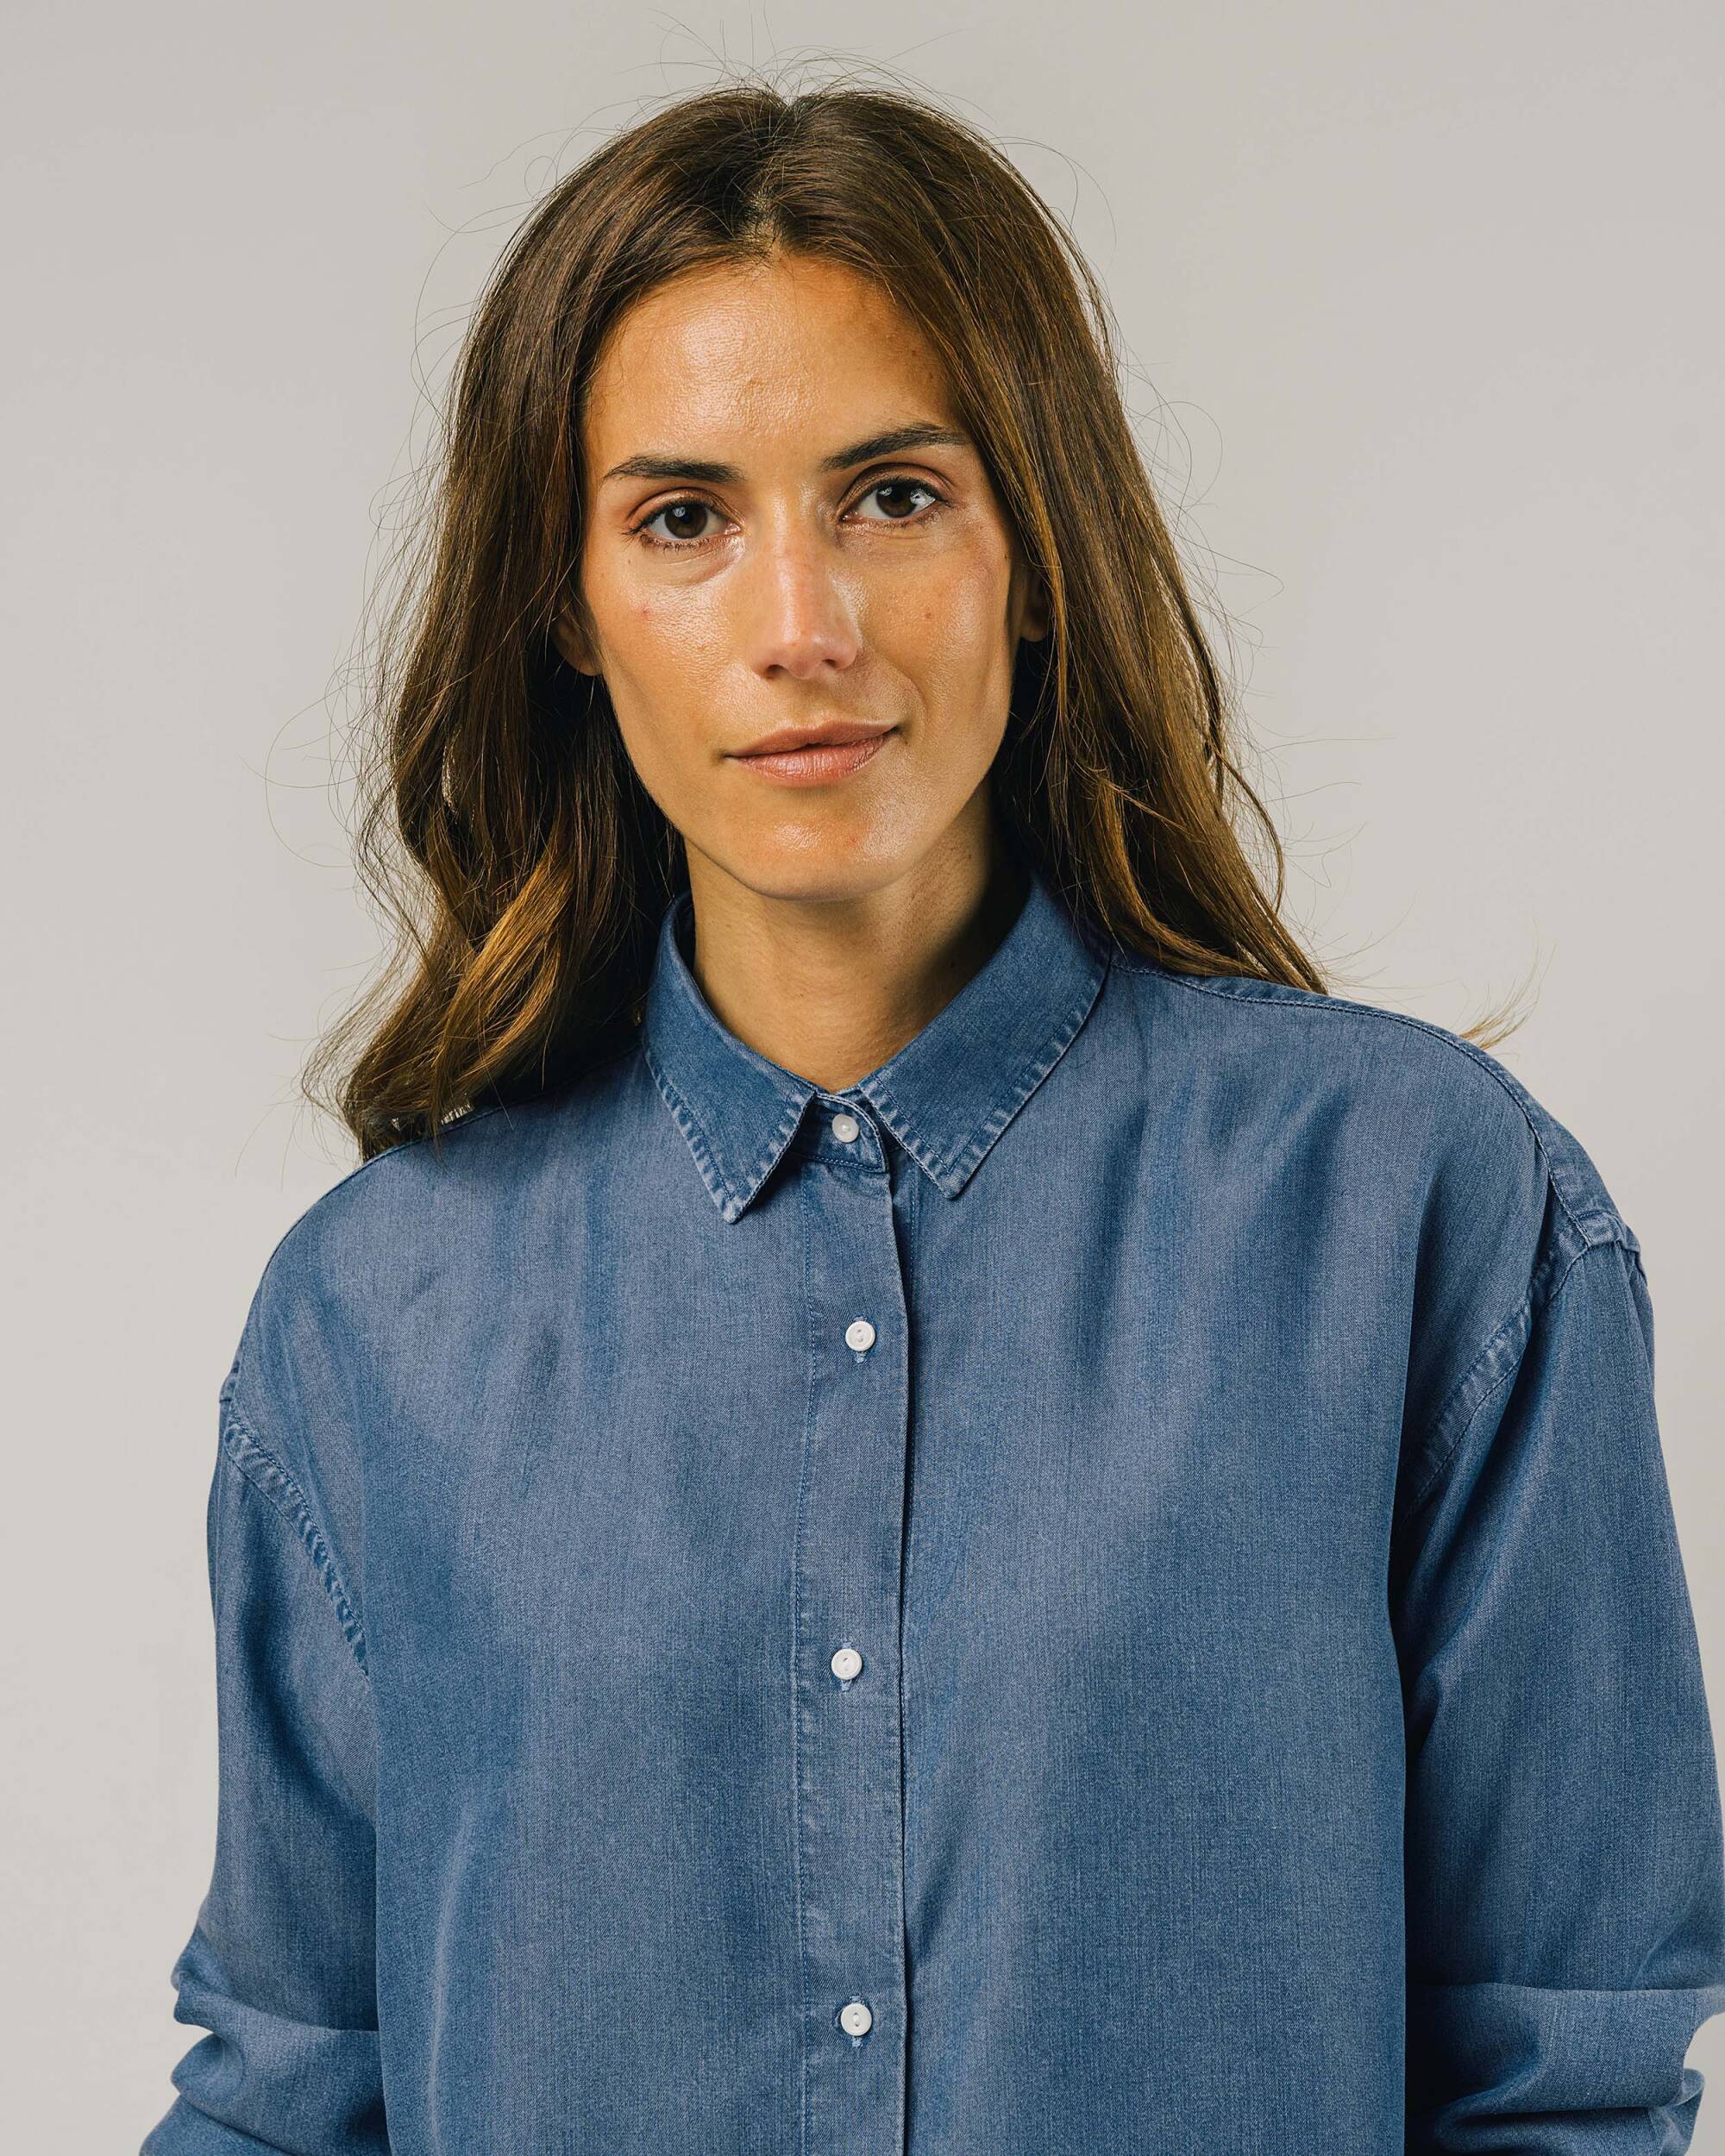 Blue, long-sleeved denim blouse made from 100% Tencel Lyocel from Brava Fabrics